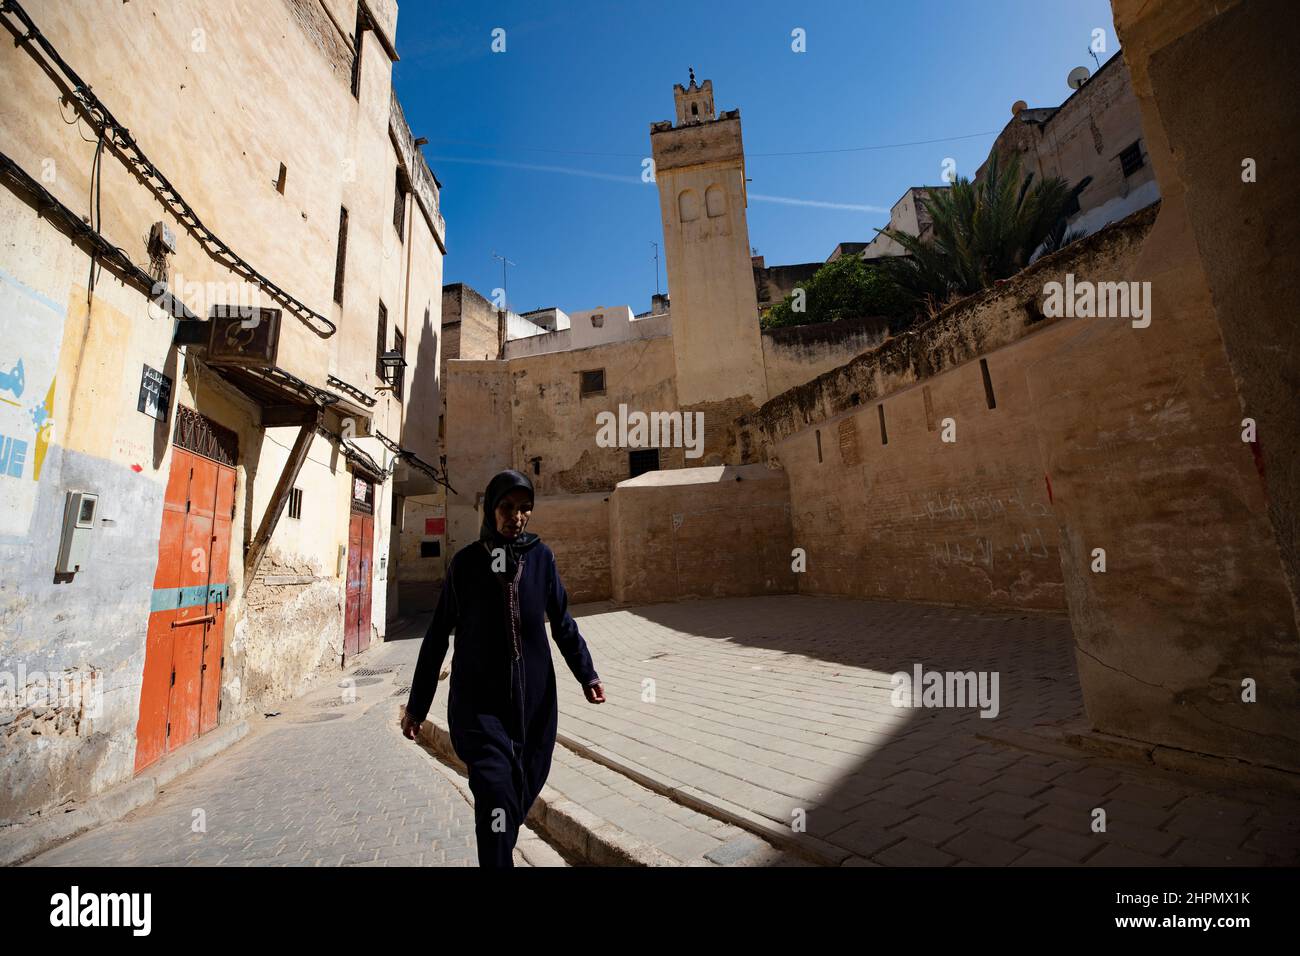 Narrow alleyways and pedestrian streets of the Fez medina - Morocco. Stock Photo